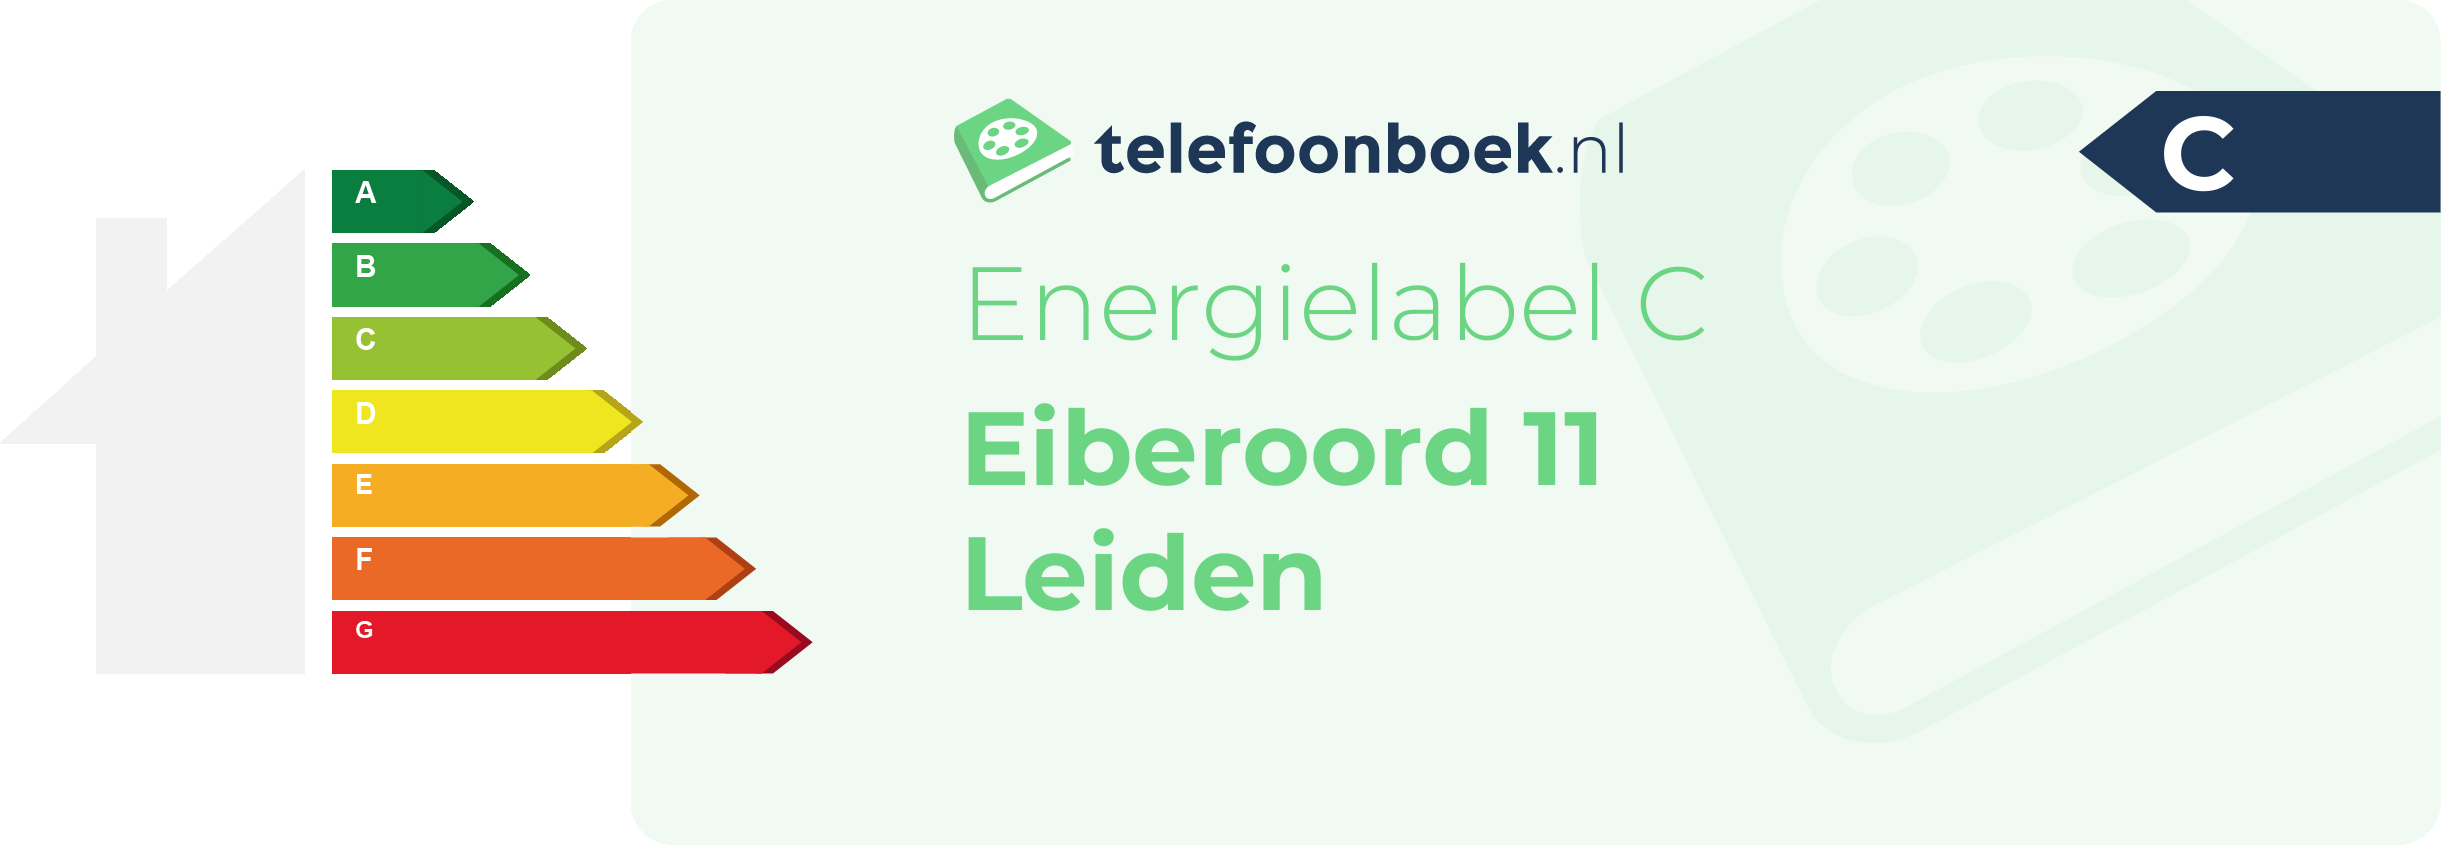 Energielabel Eiberoord 11 Leiden